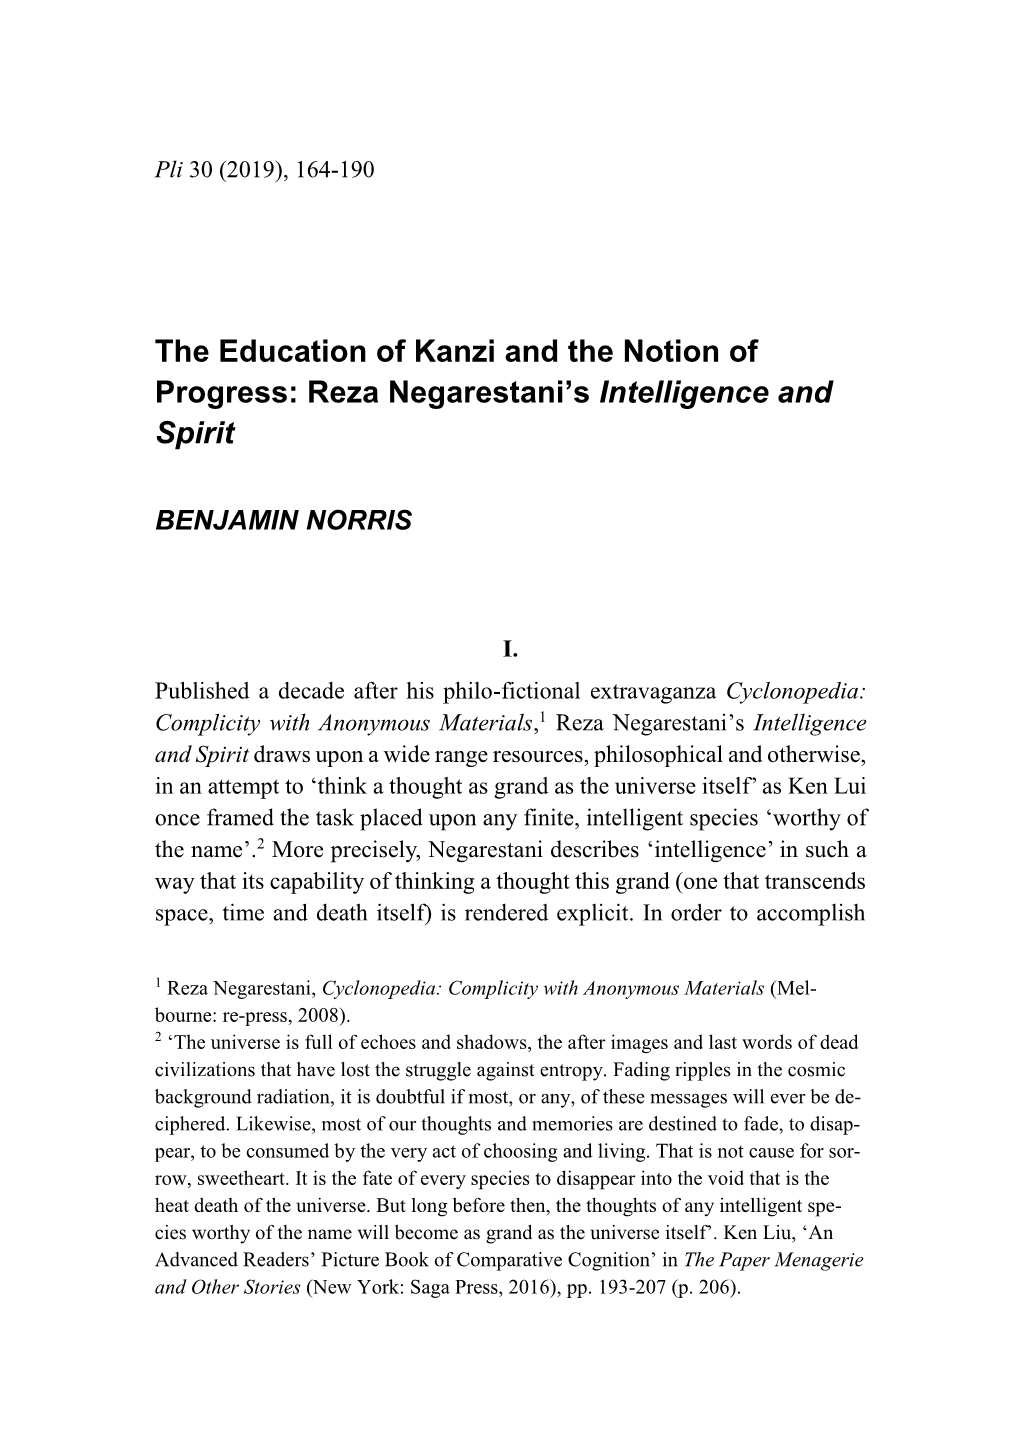 The Education of Kanzi and the Notion of Progress: Reza Negarestani's Intelligence and Spirit